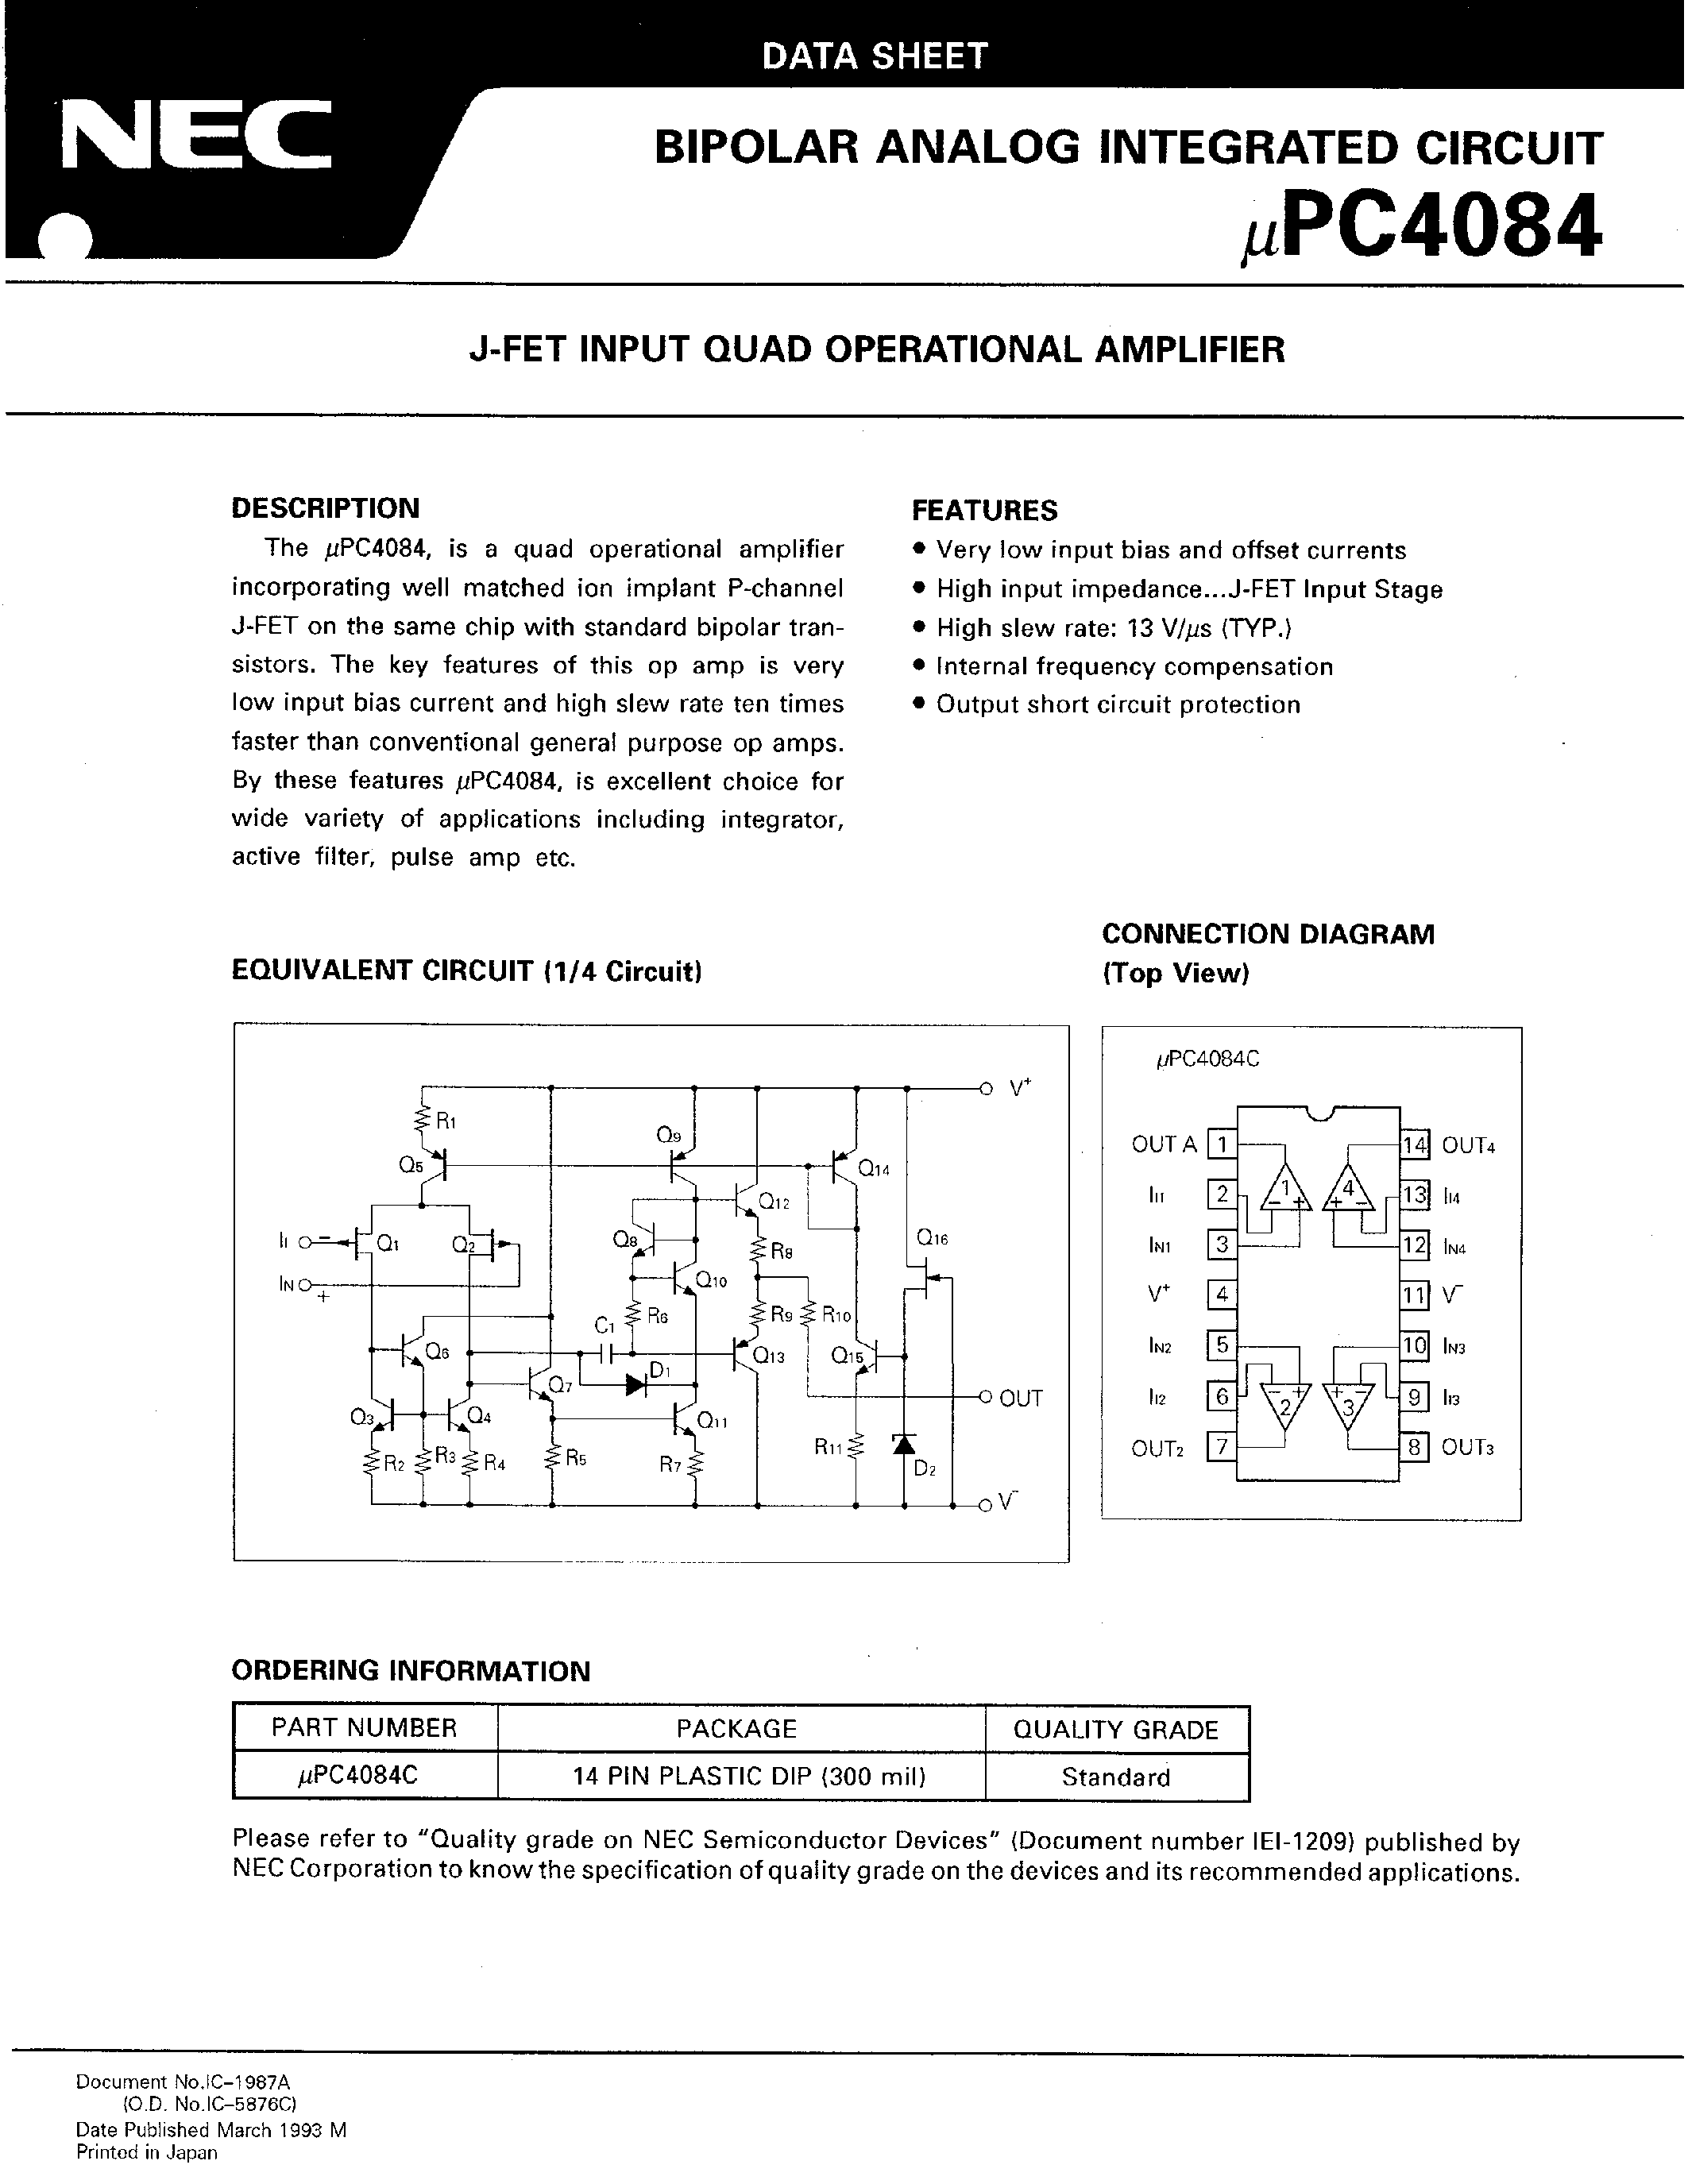 Datasheet UPC4084 - J-FET INPUT QUAD OPERATIONAL AMPLIFIER page 1